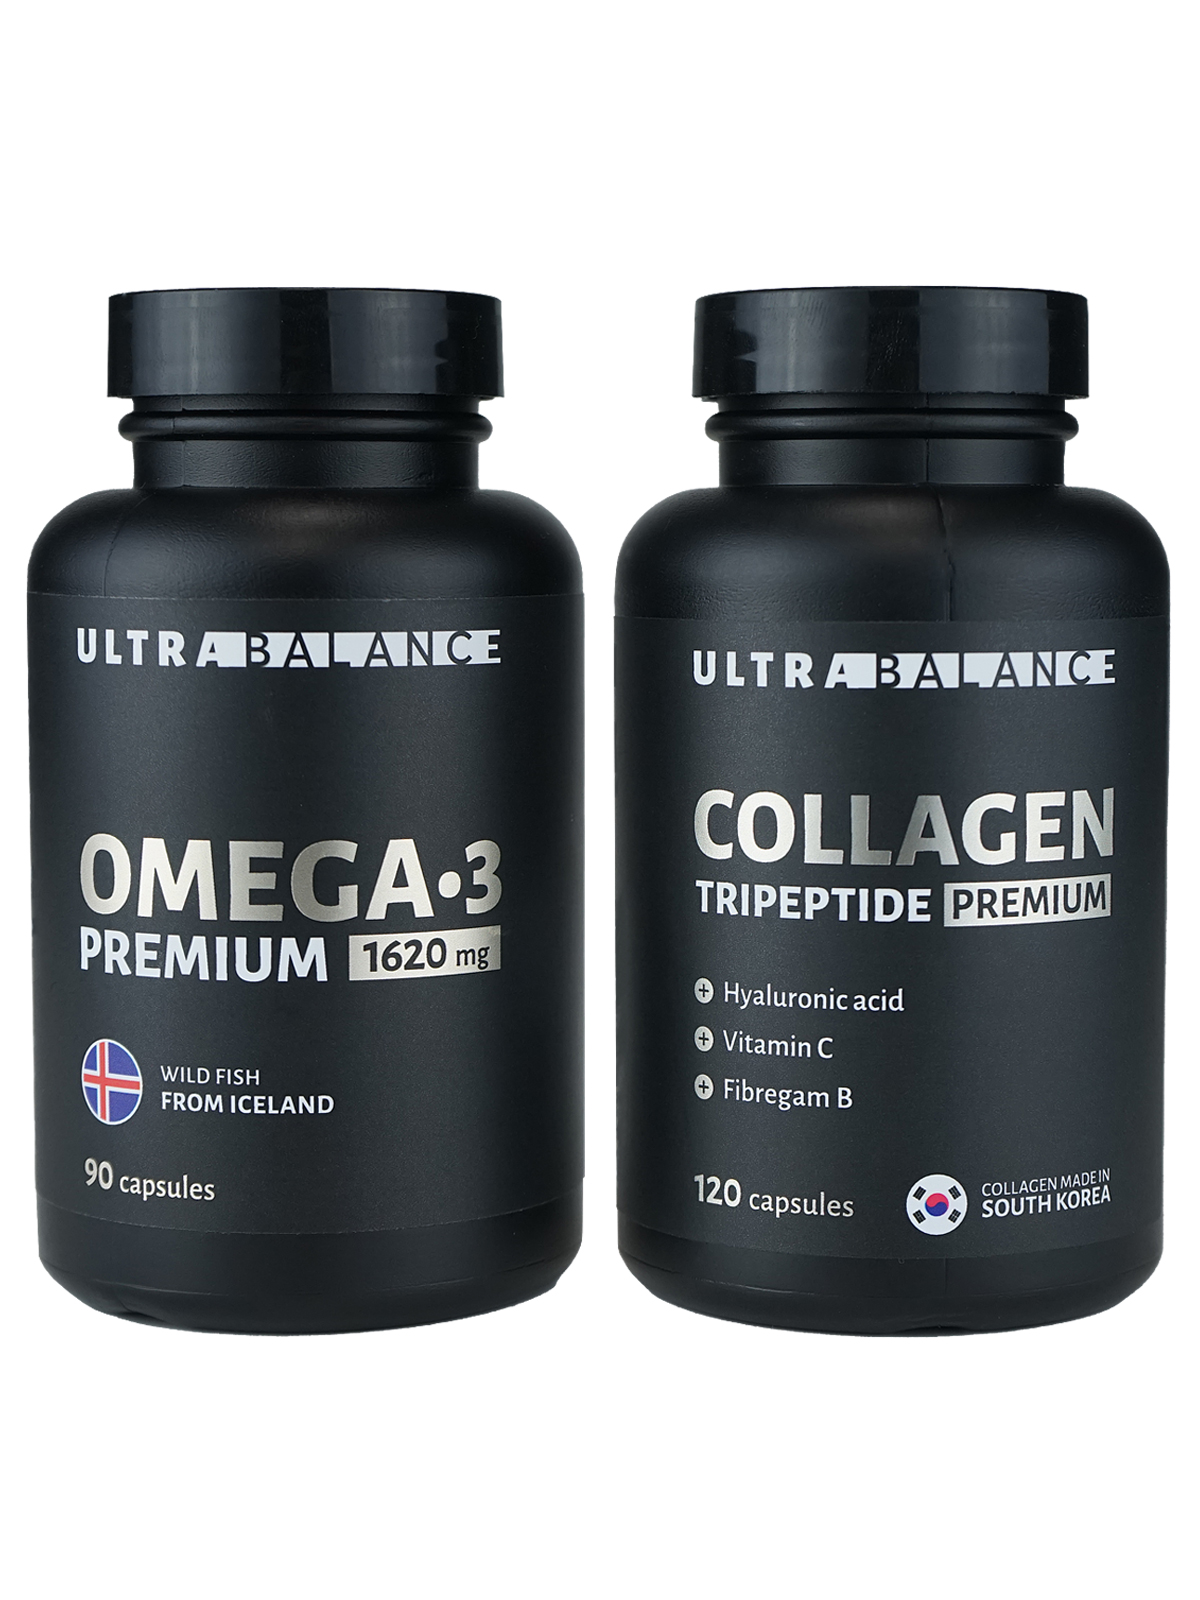 Купить Омега 3 UltraBalance капсулы 1620 мг 90 шт. + Коллаген UltraBalance капсулы 120 шт.